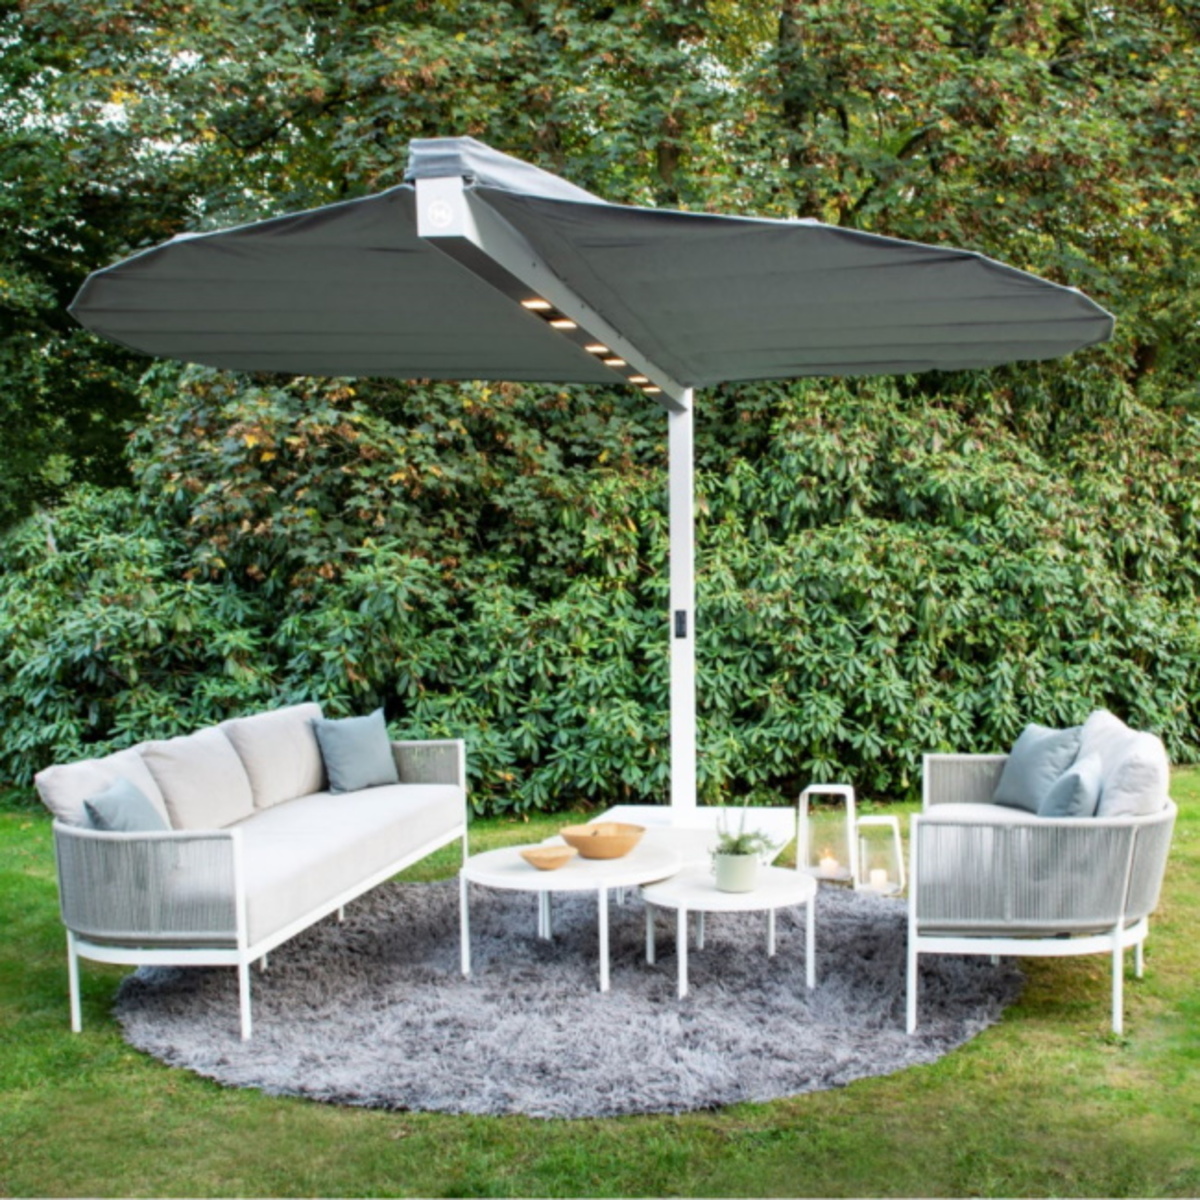 Heatsail LEAF electric garden heater and parasol